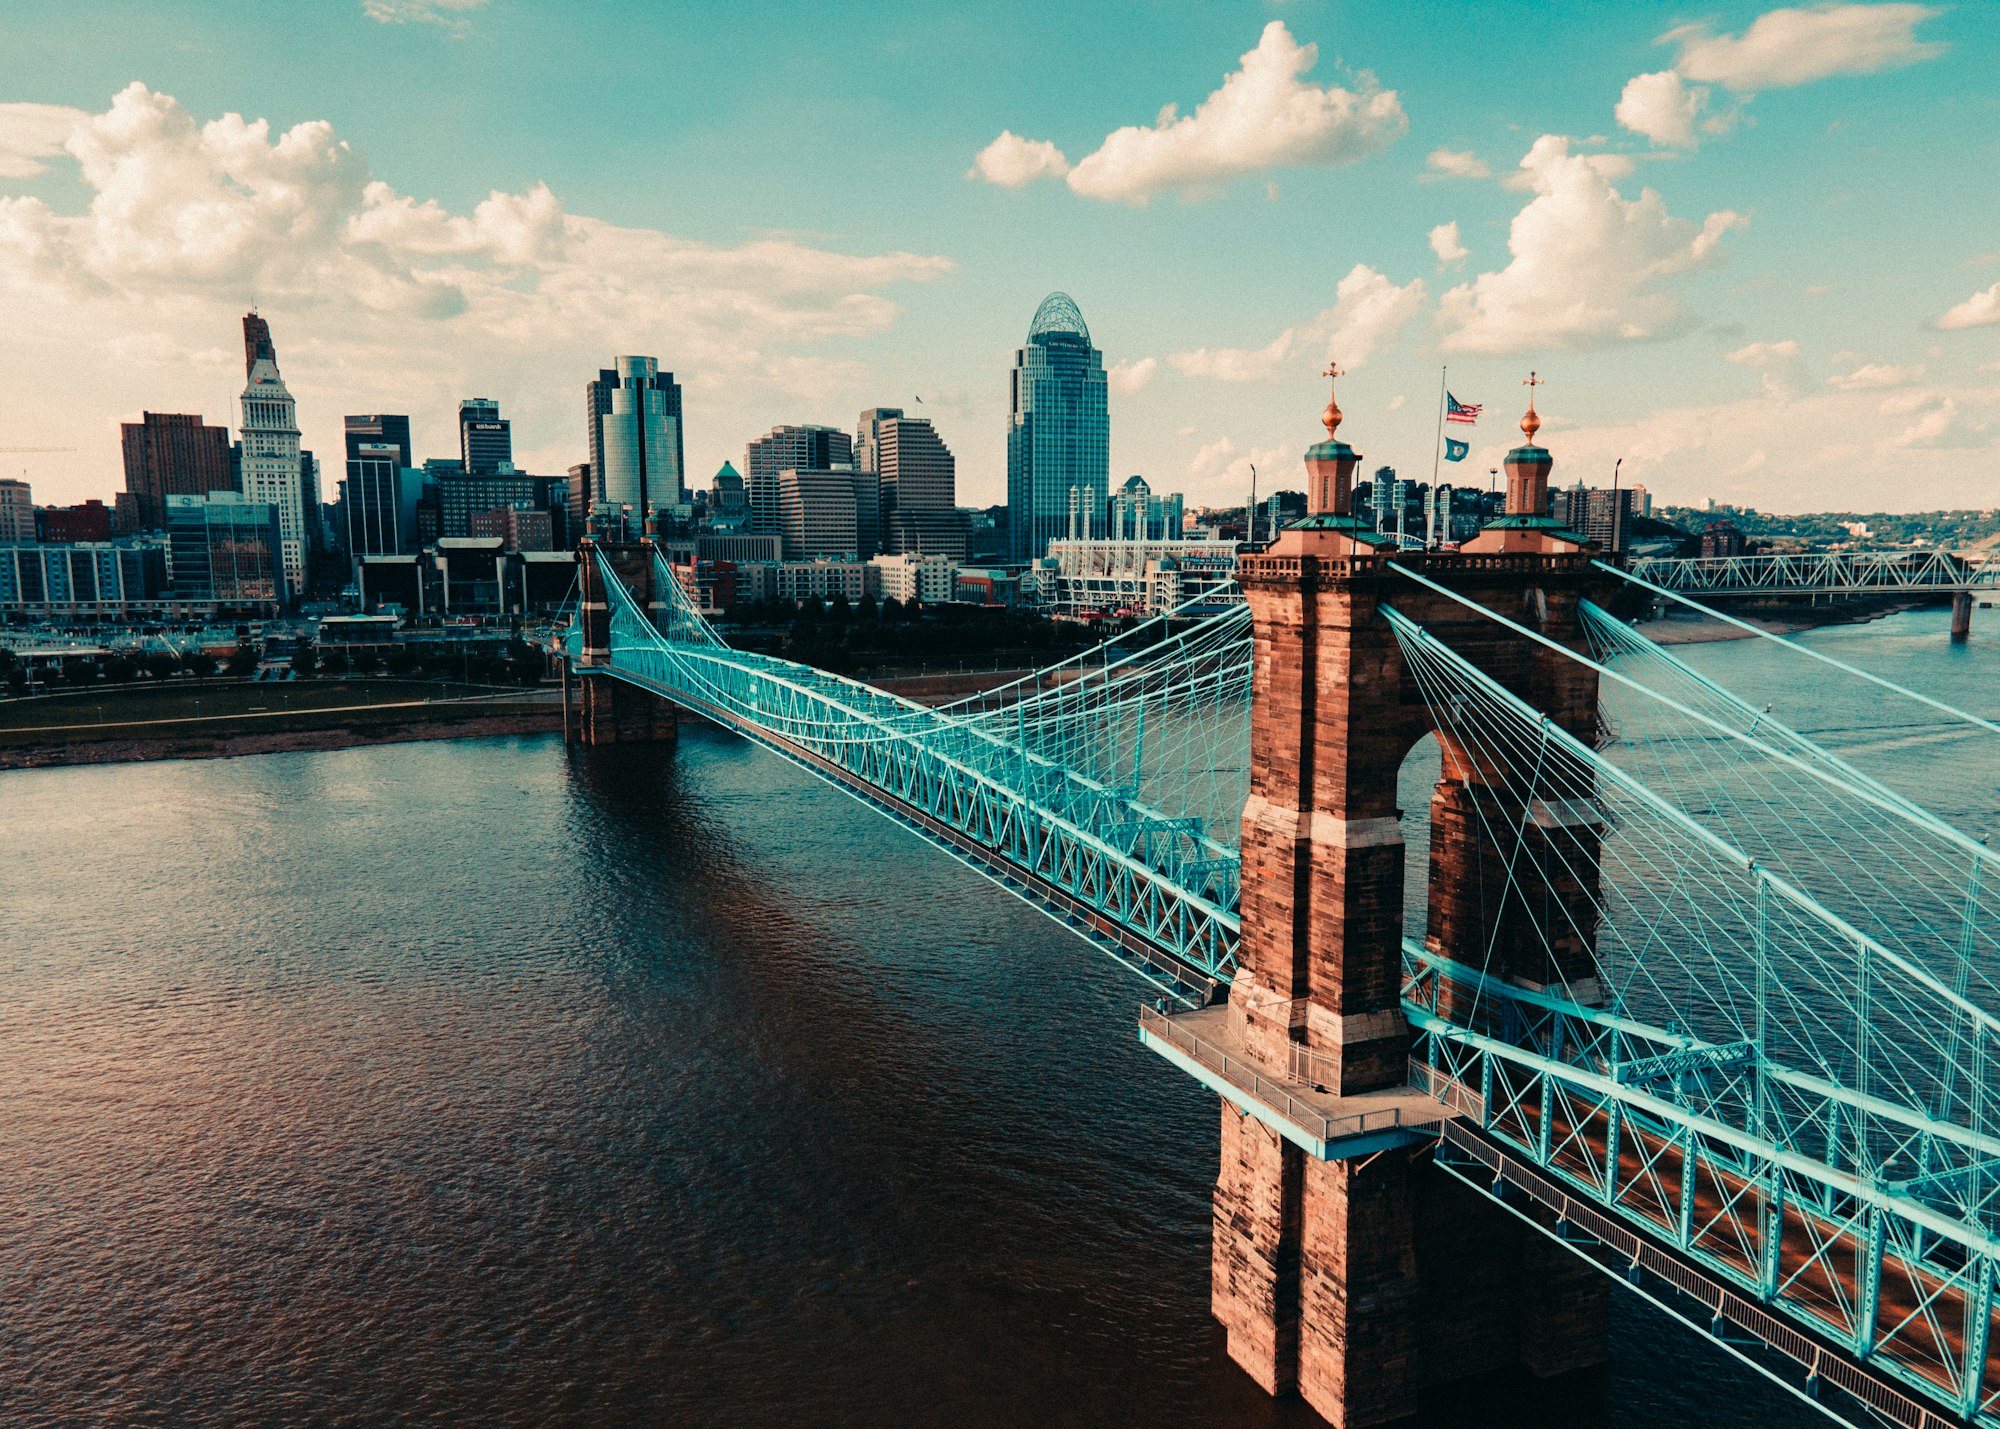 Cityscape of Cincinnati's Roebling bridge.